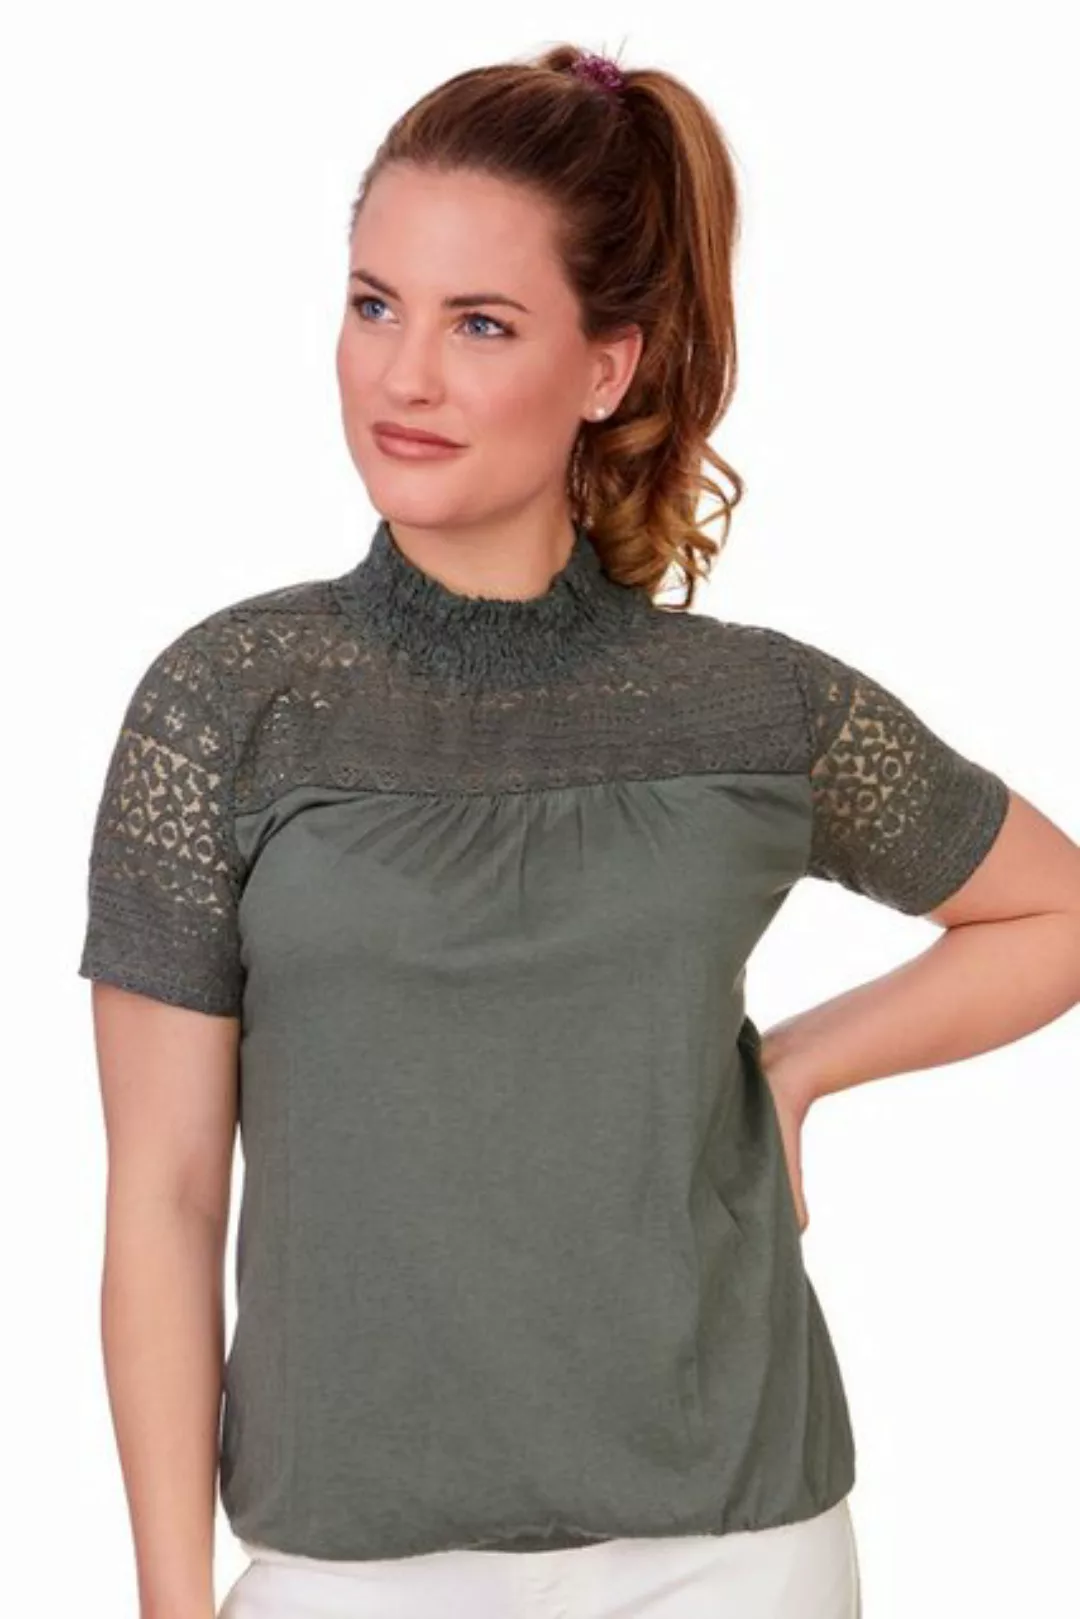 Hangowear Trachtenshirt Blusenshirt - WEDIS - offweiß, retro petrol günstig online kaufen